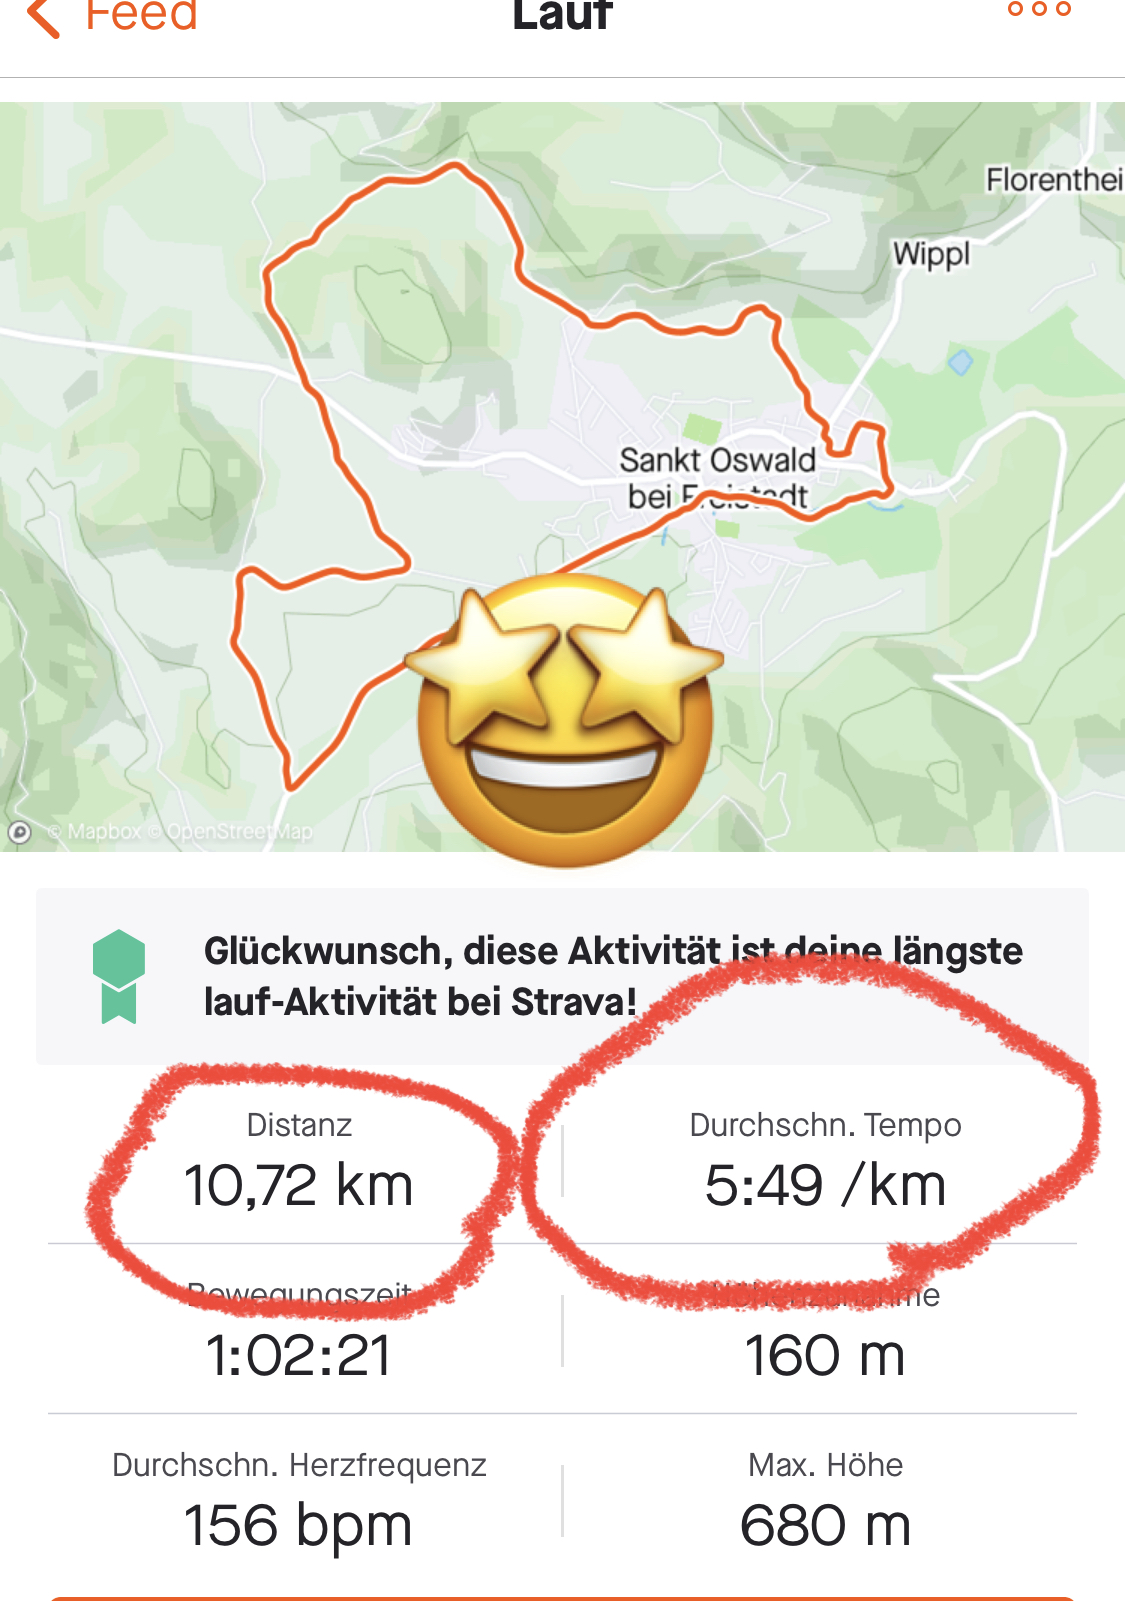 Strava App: I ran 10.72km